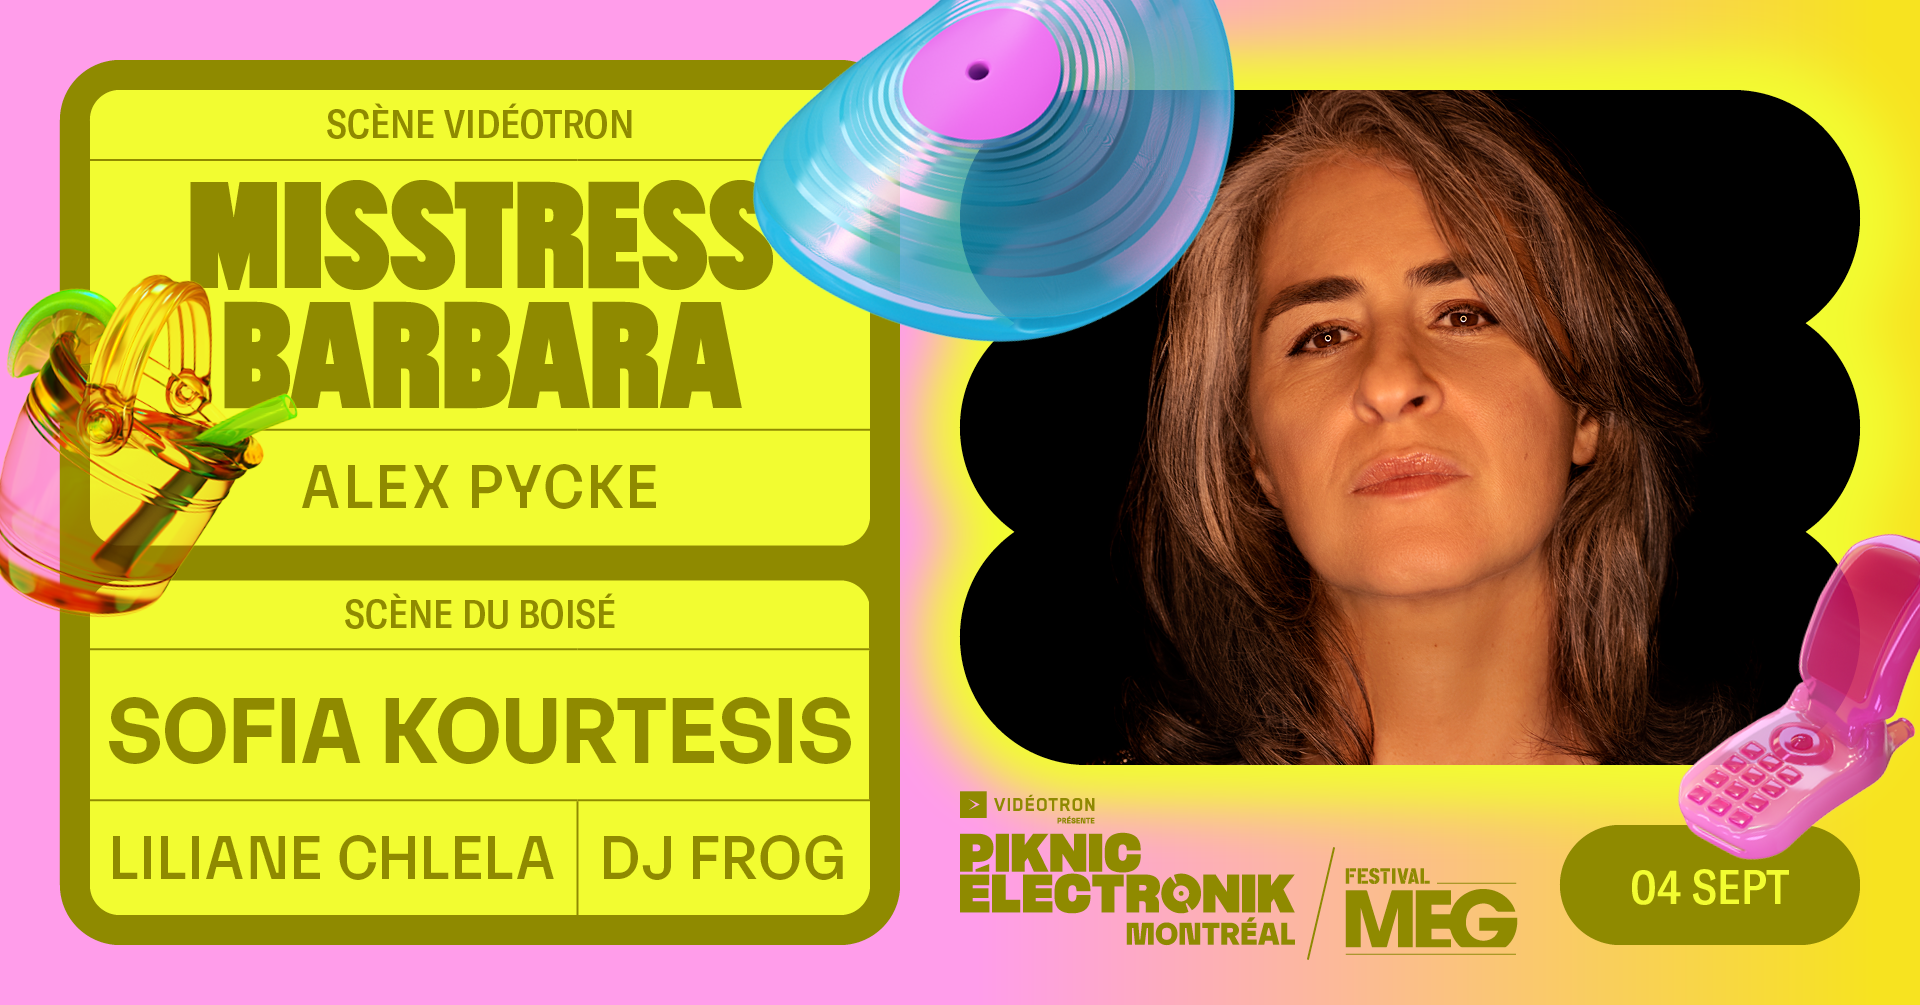 Piknic Électronik MTL #13 - MEG: Misstress Barbara / Sofia Kourtesis - フライヤー表